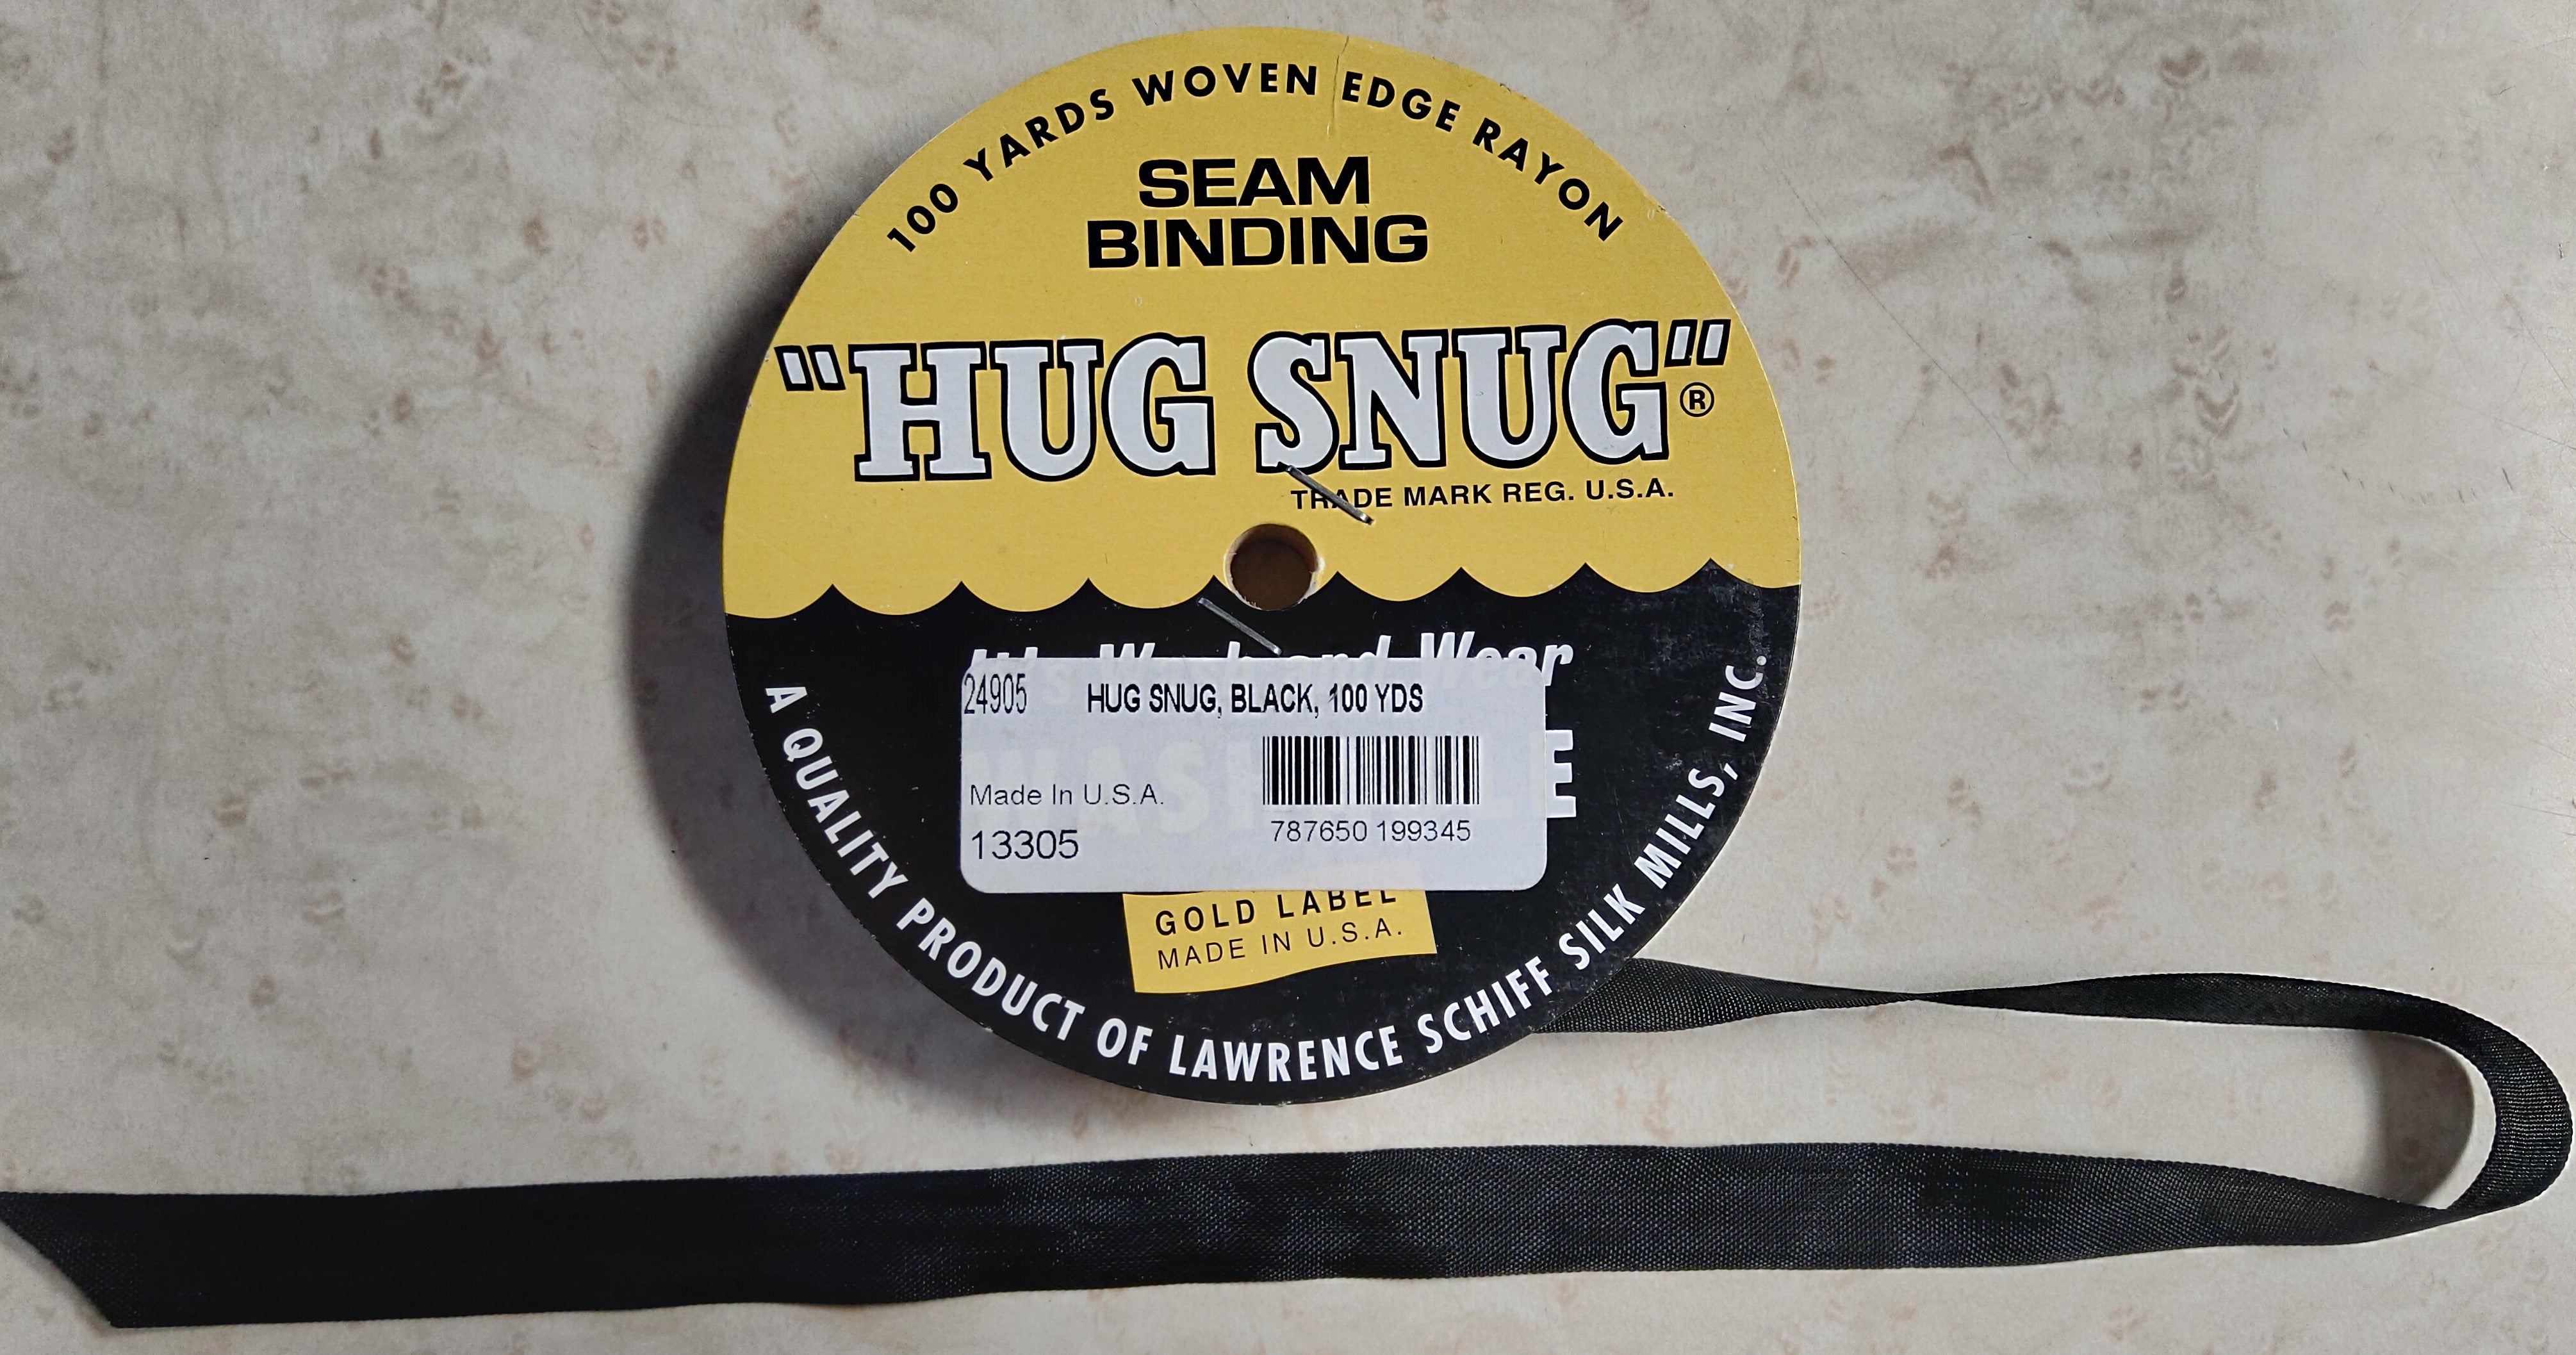 HUG SNUG - Seam Binding - Schiff Brand